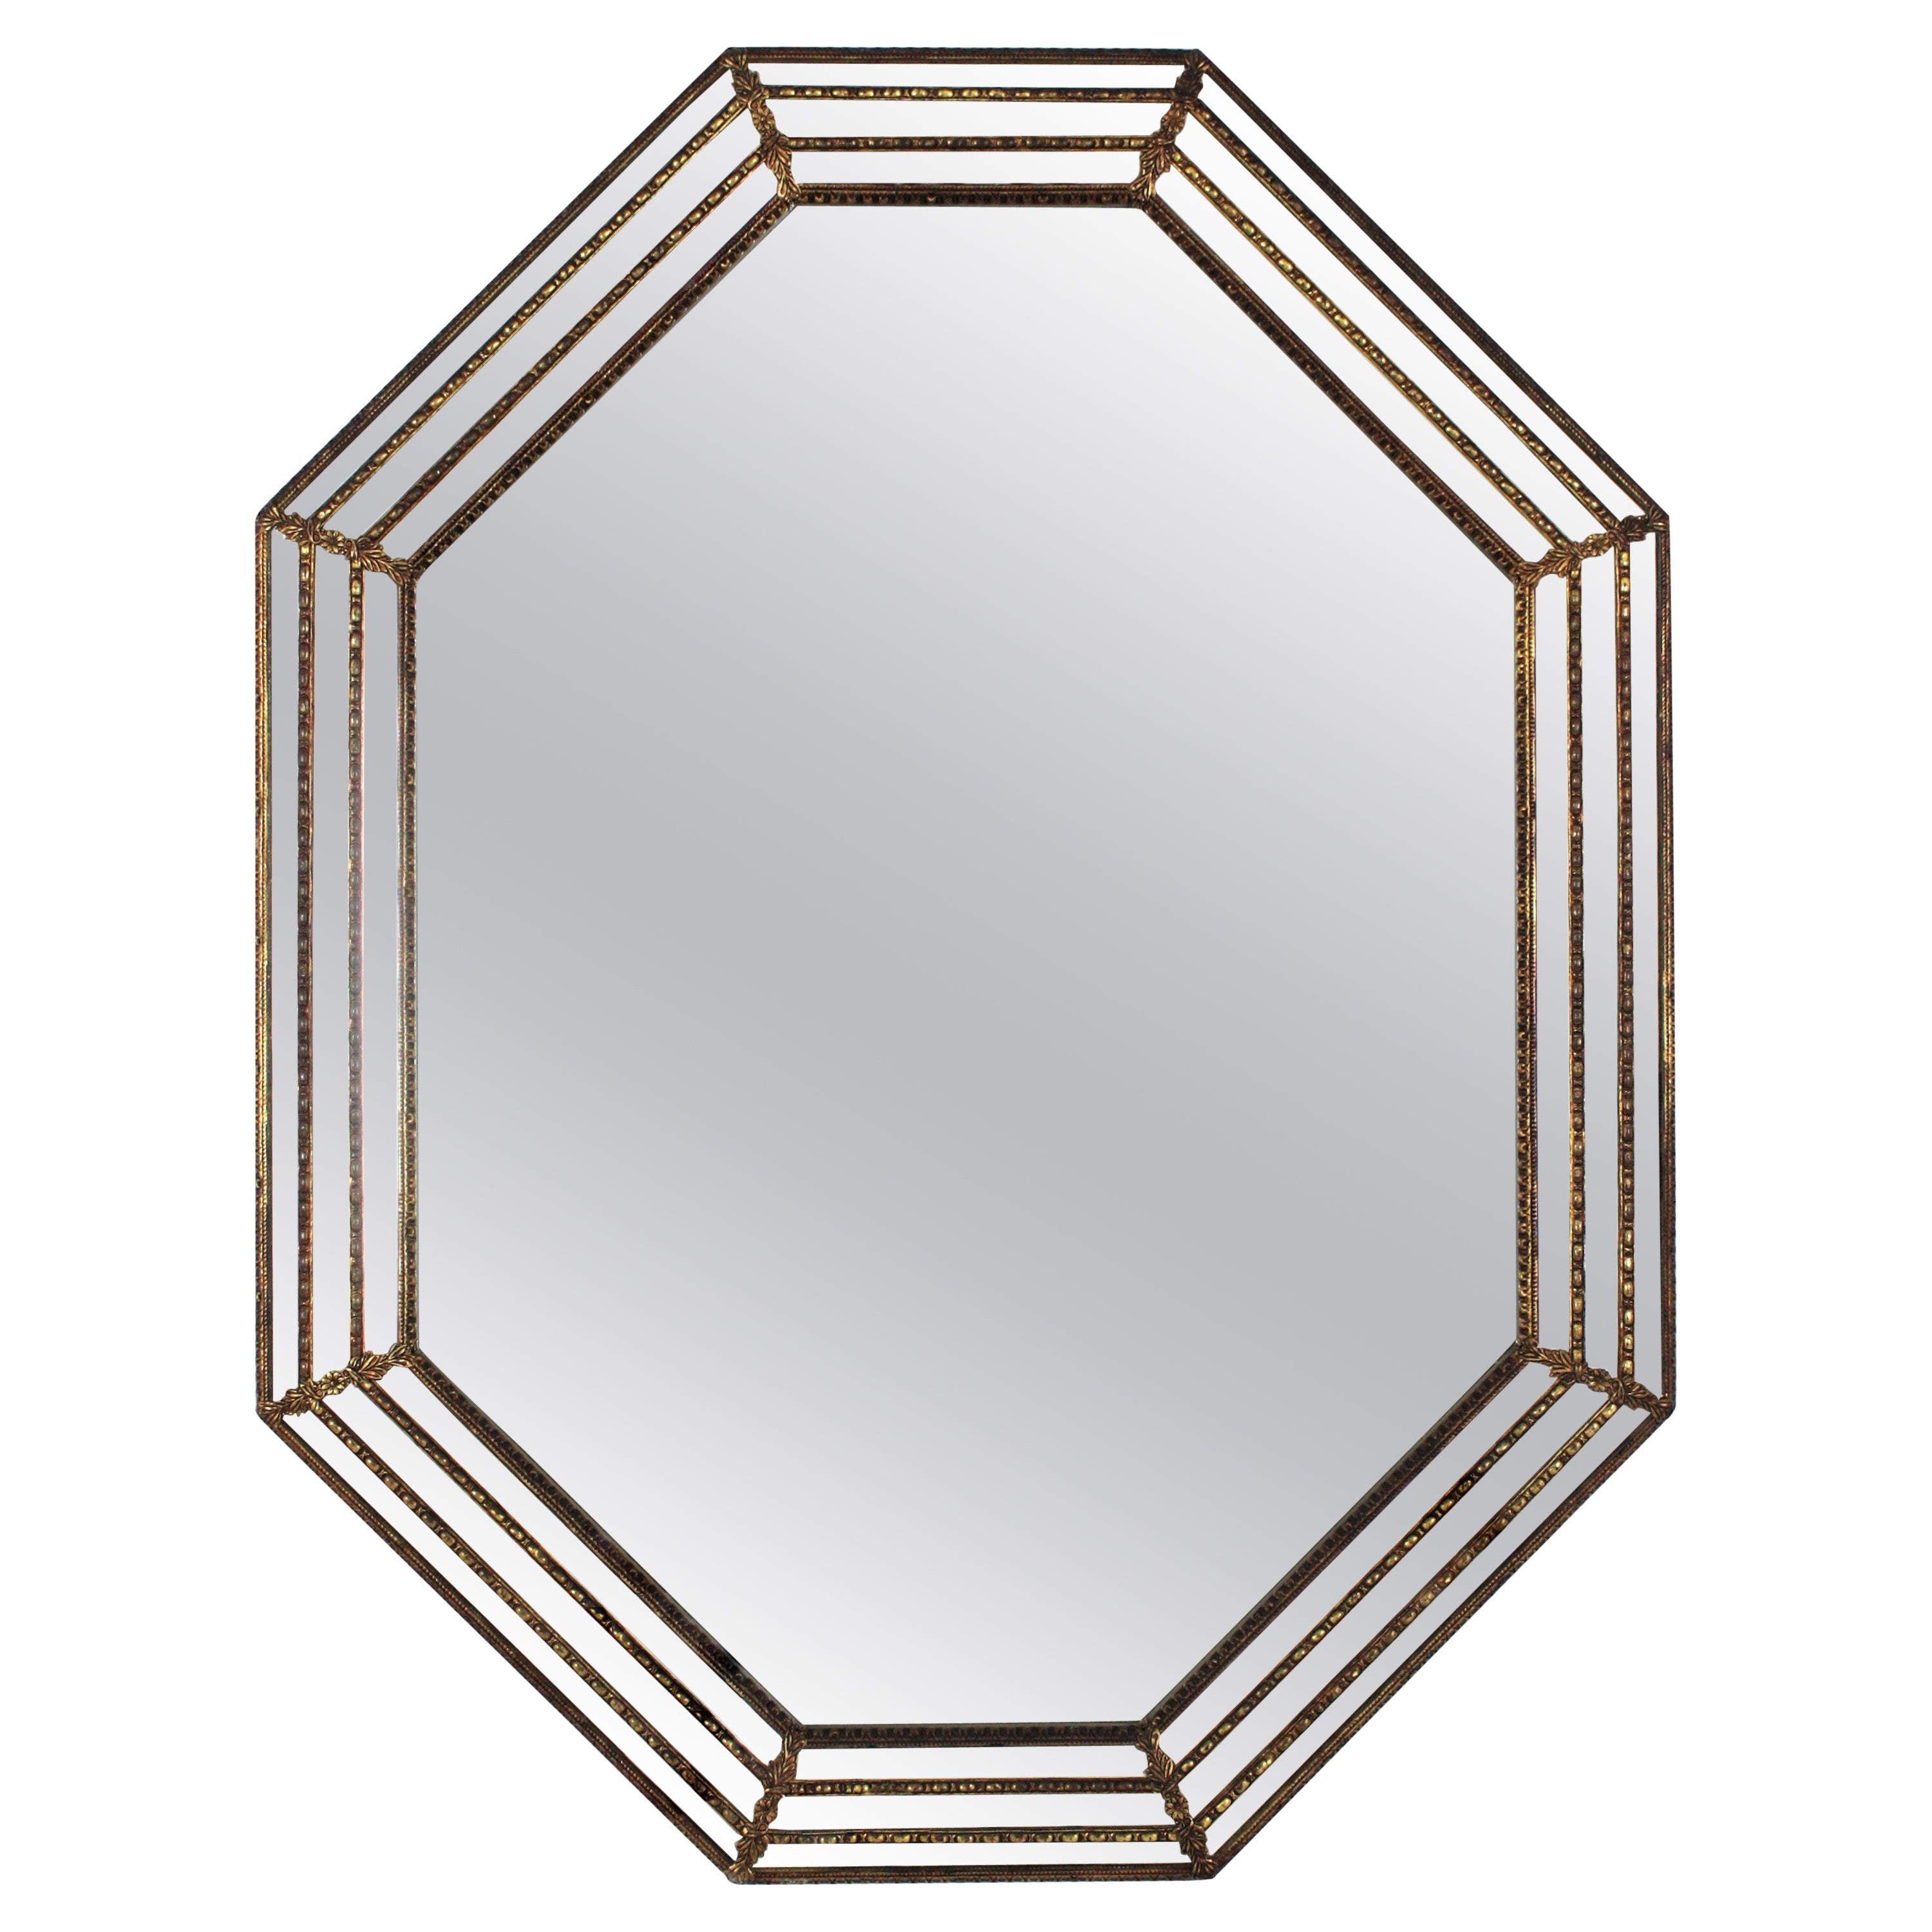 Octagonal Venetian Style Mirror with Brass Details